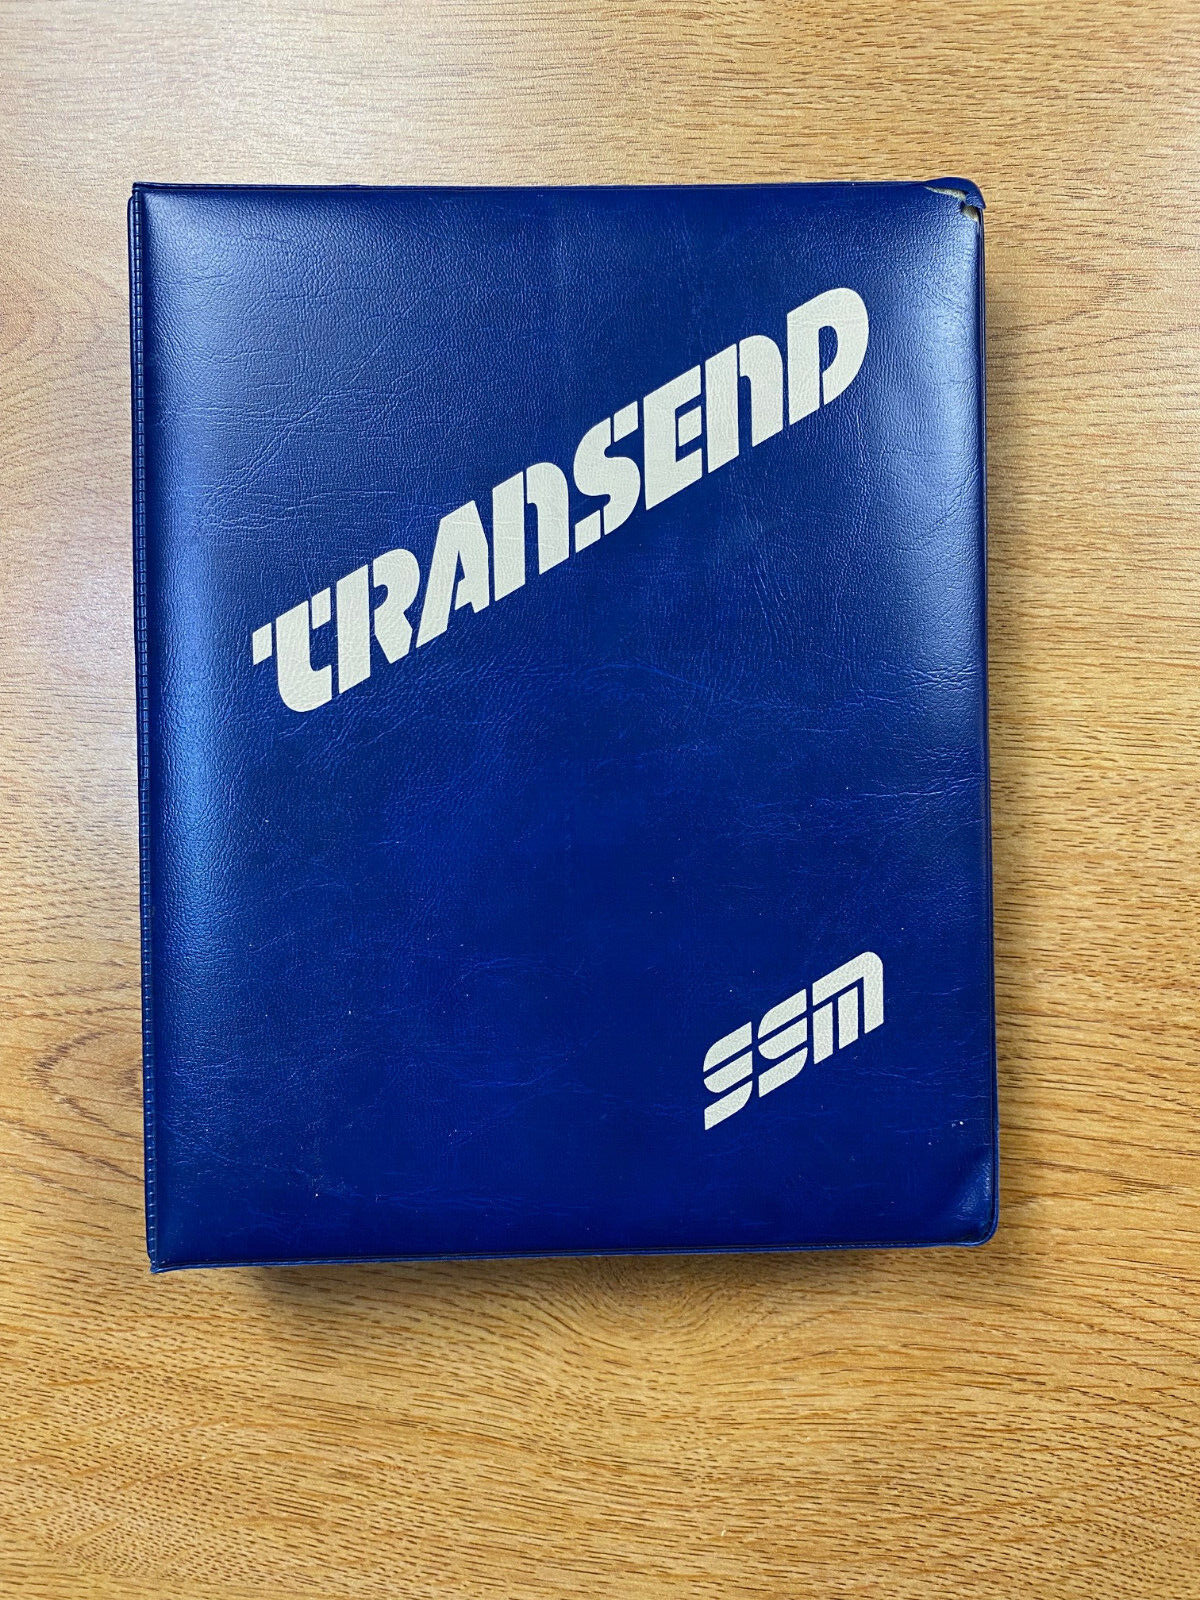 Transend SSM Vintage Manual